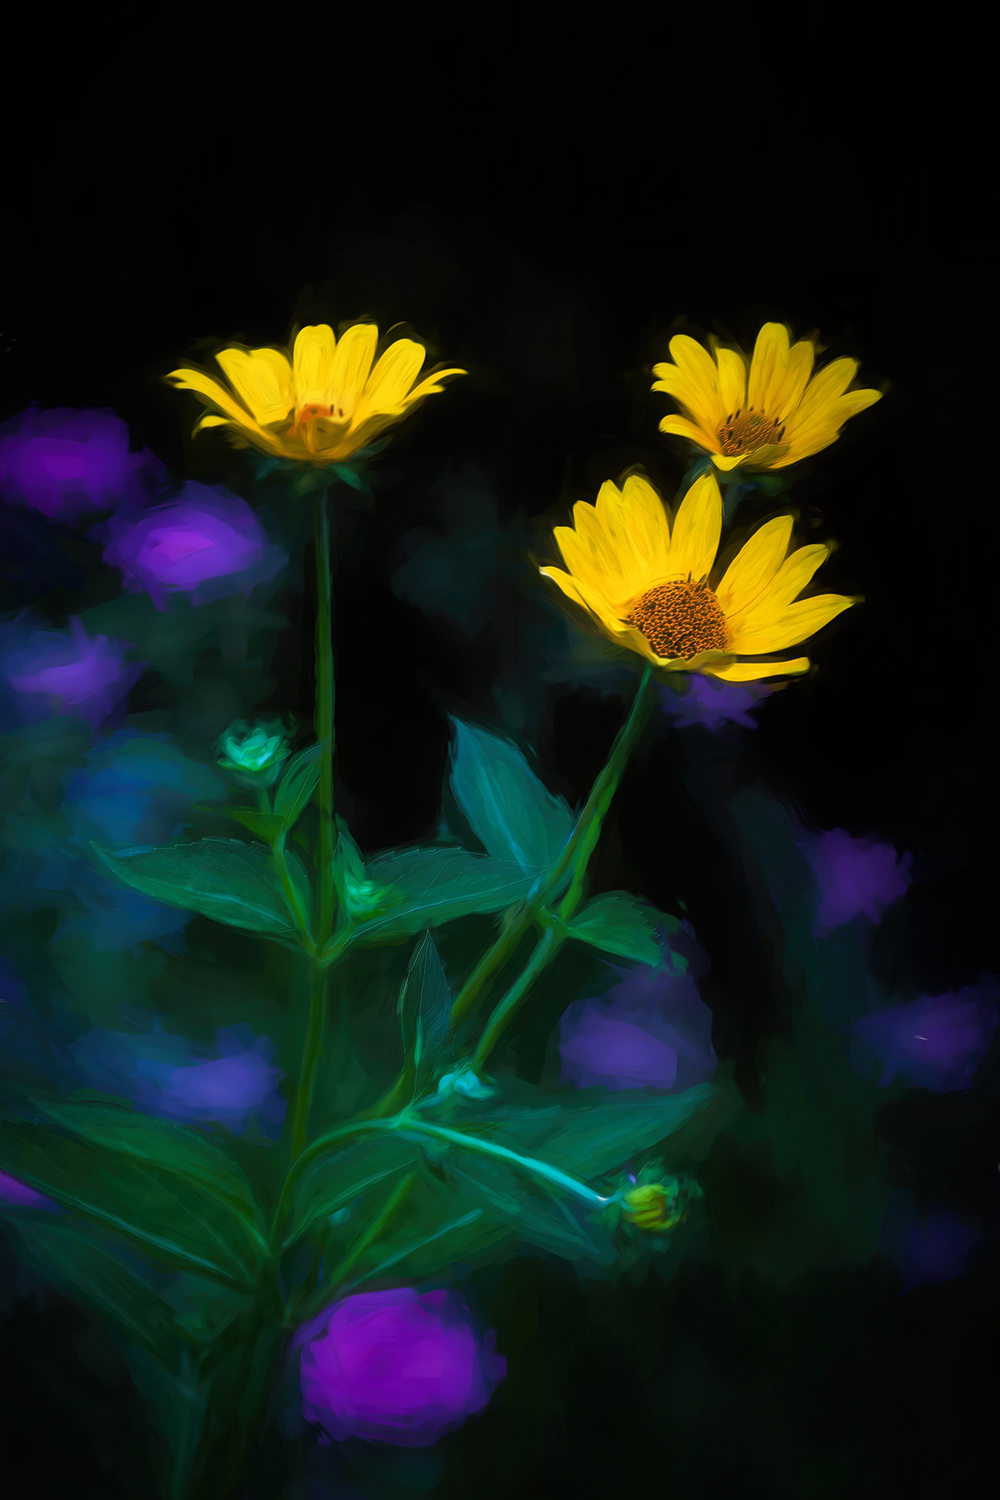 False Sunflower by Trey Foerster